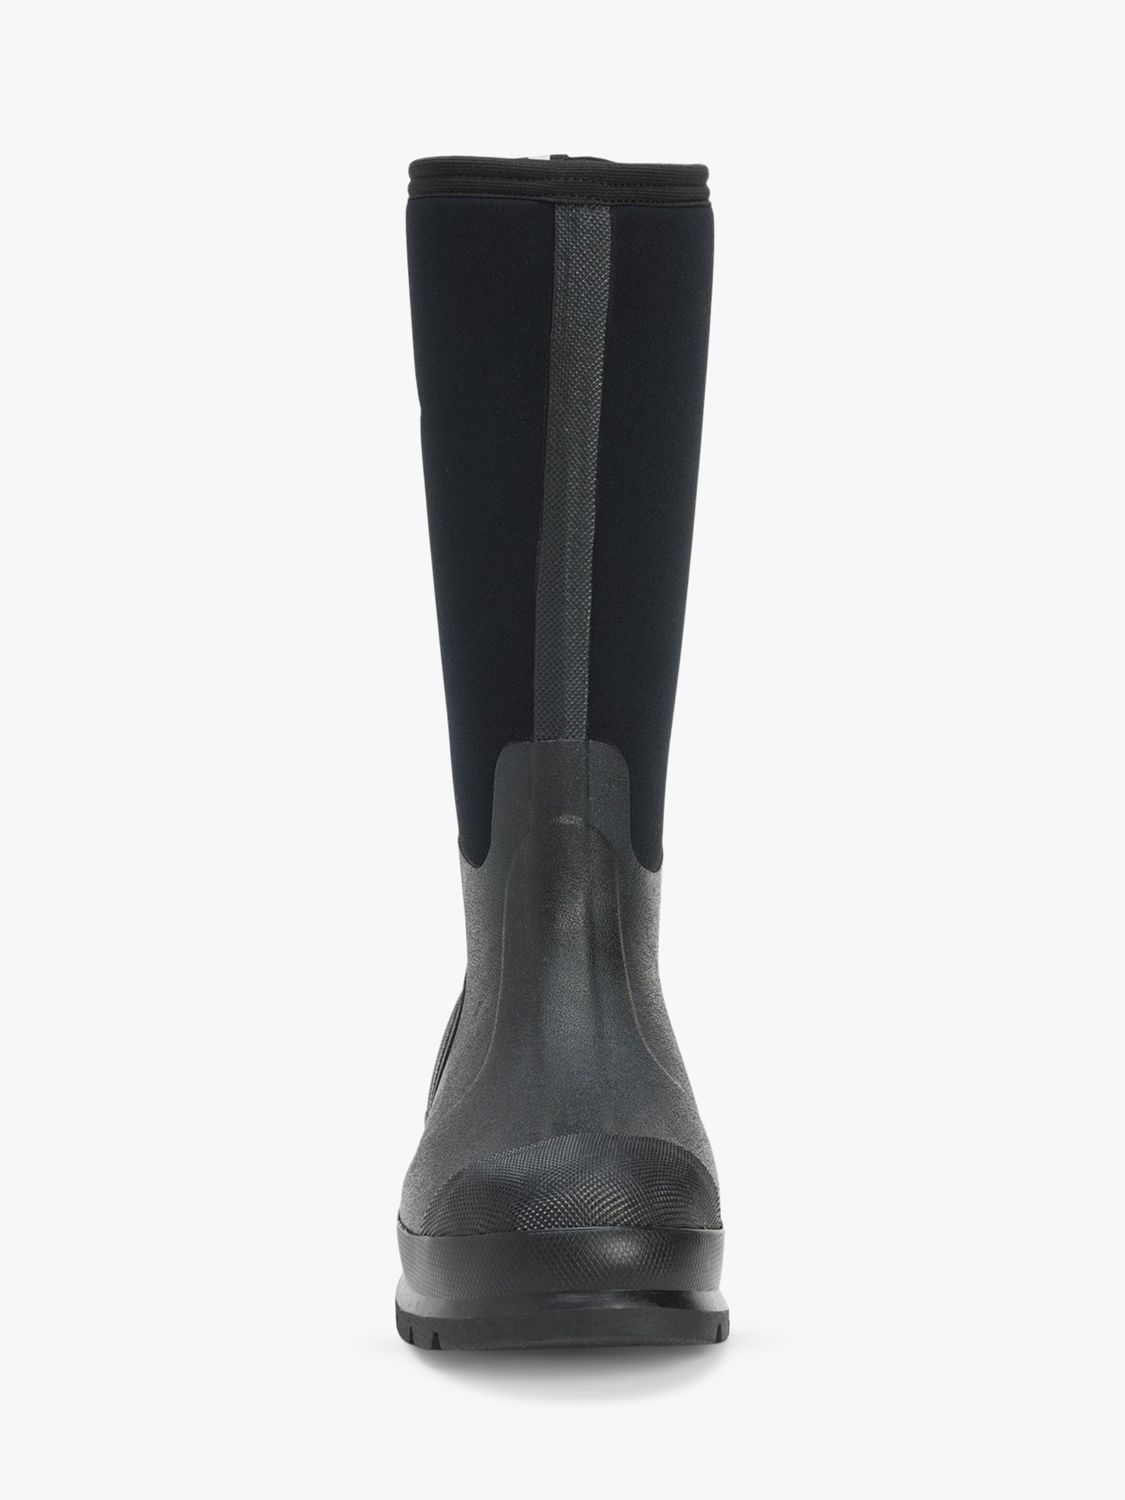 Muck Chore Classic Tall Wellington Boots, Black, 4